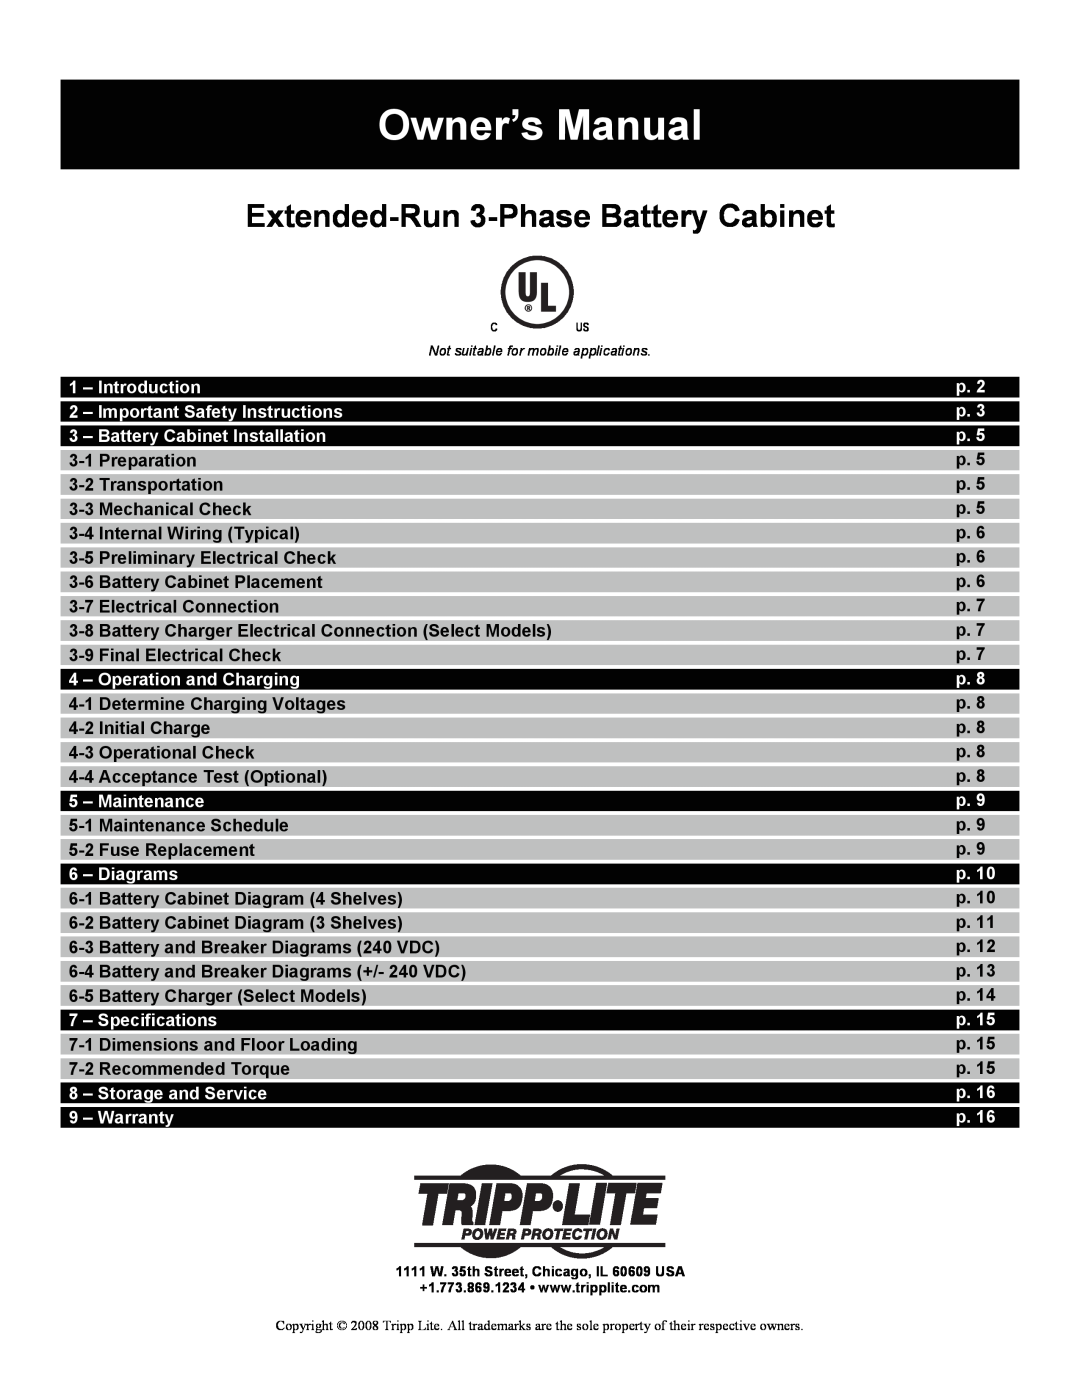 Tripp Lite Extended-Run 3-Phase Battery Cabinet owner manual Owner’s Manual, Battery Cabinet Installation, Maintenance 